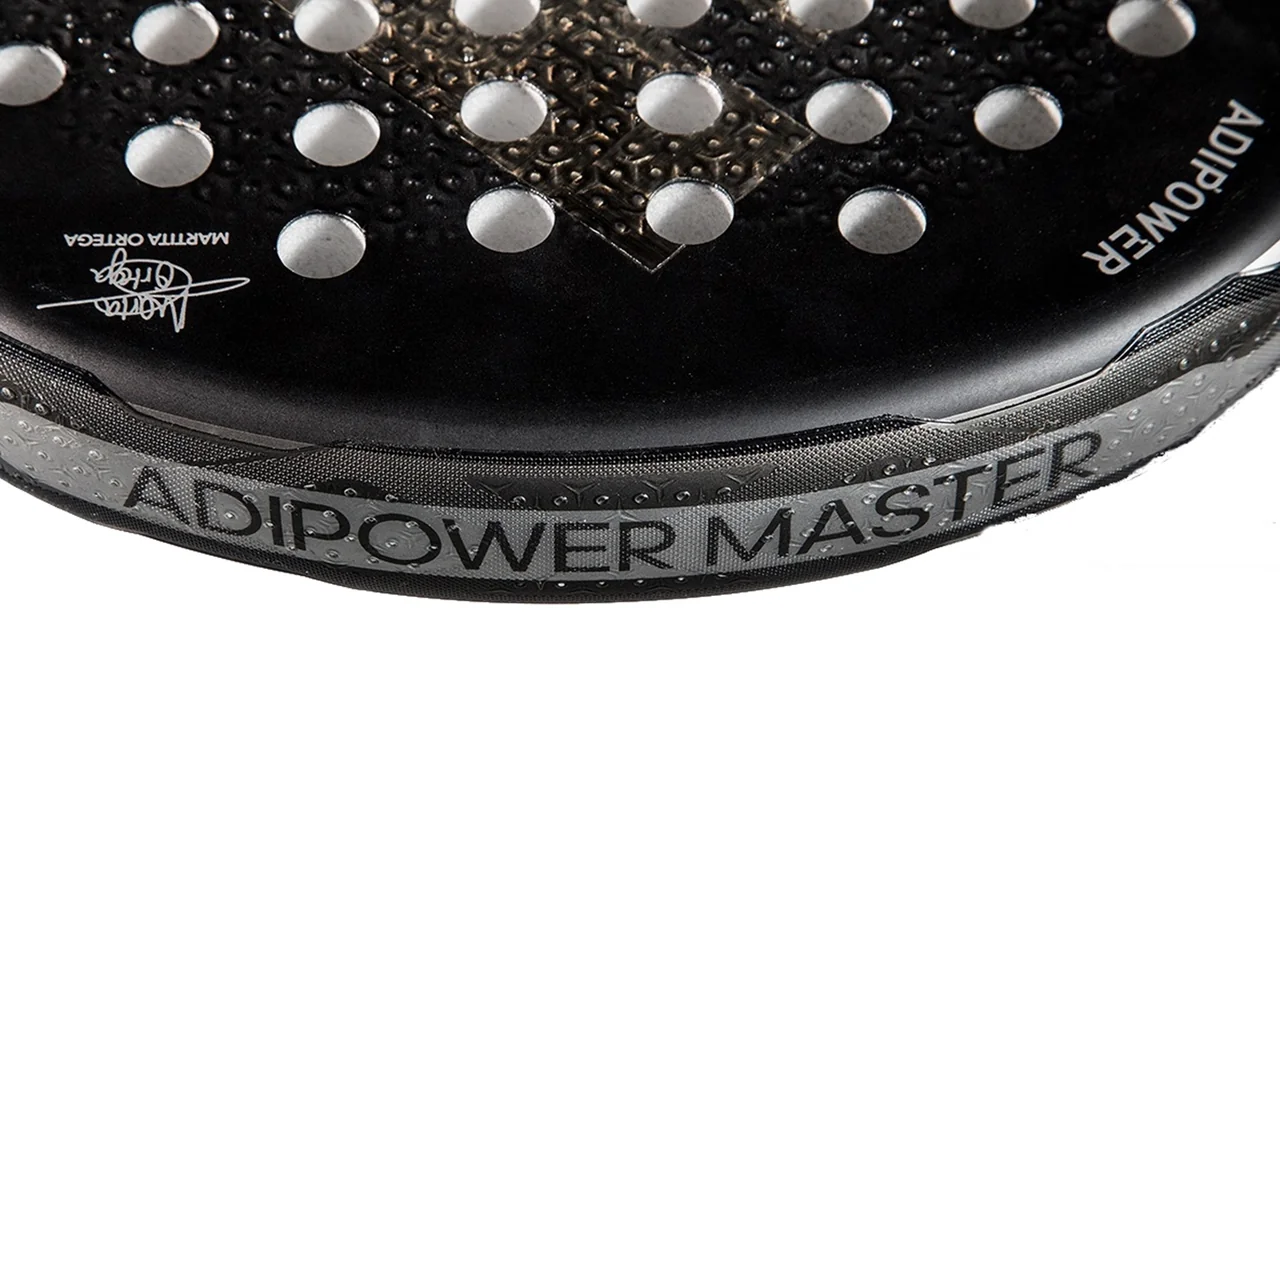 Adidas Adipower Master LTD 2022